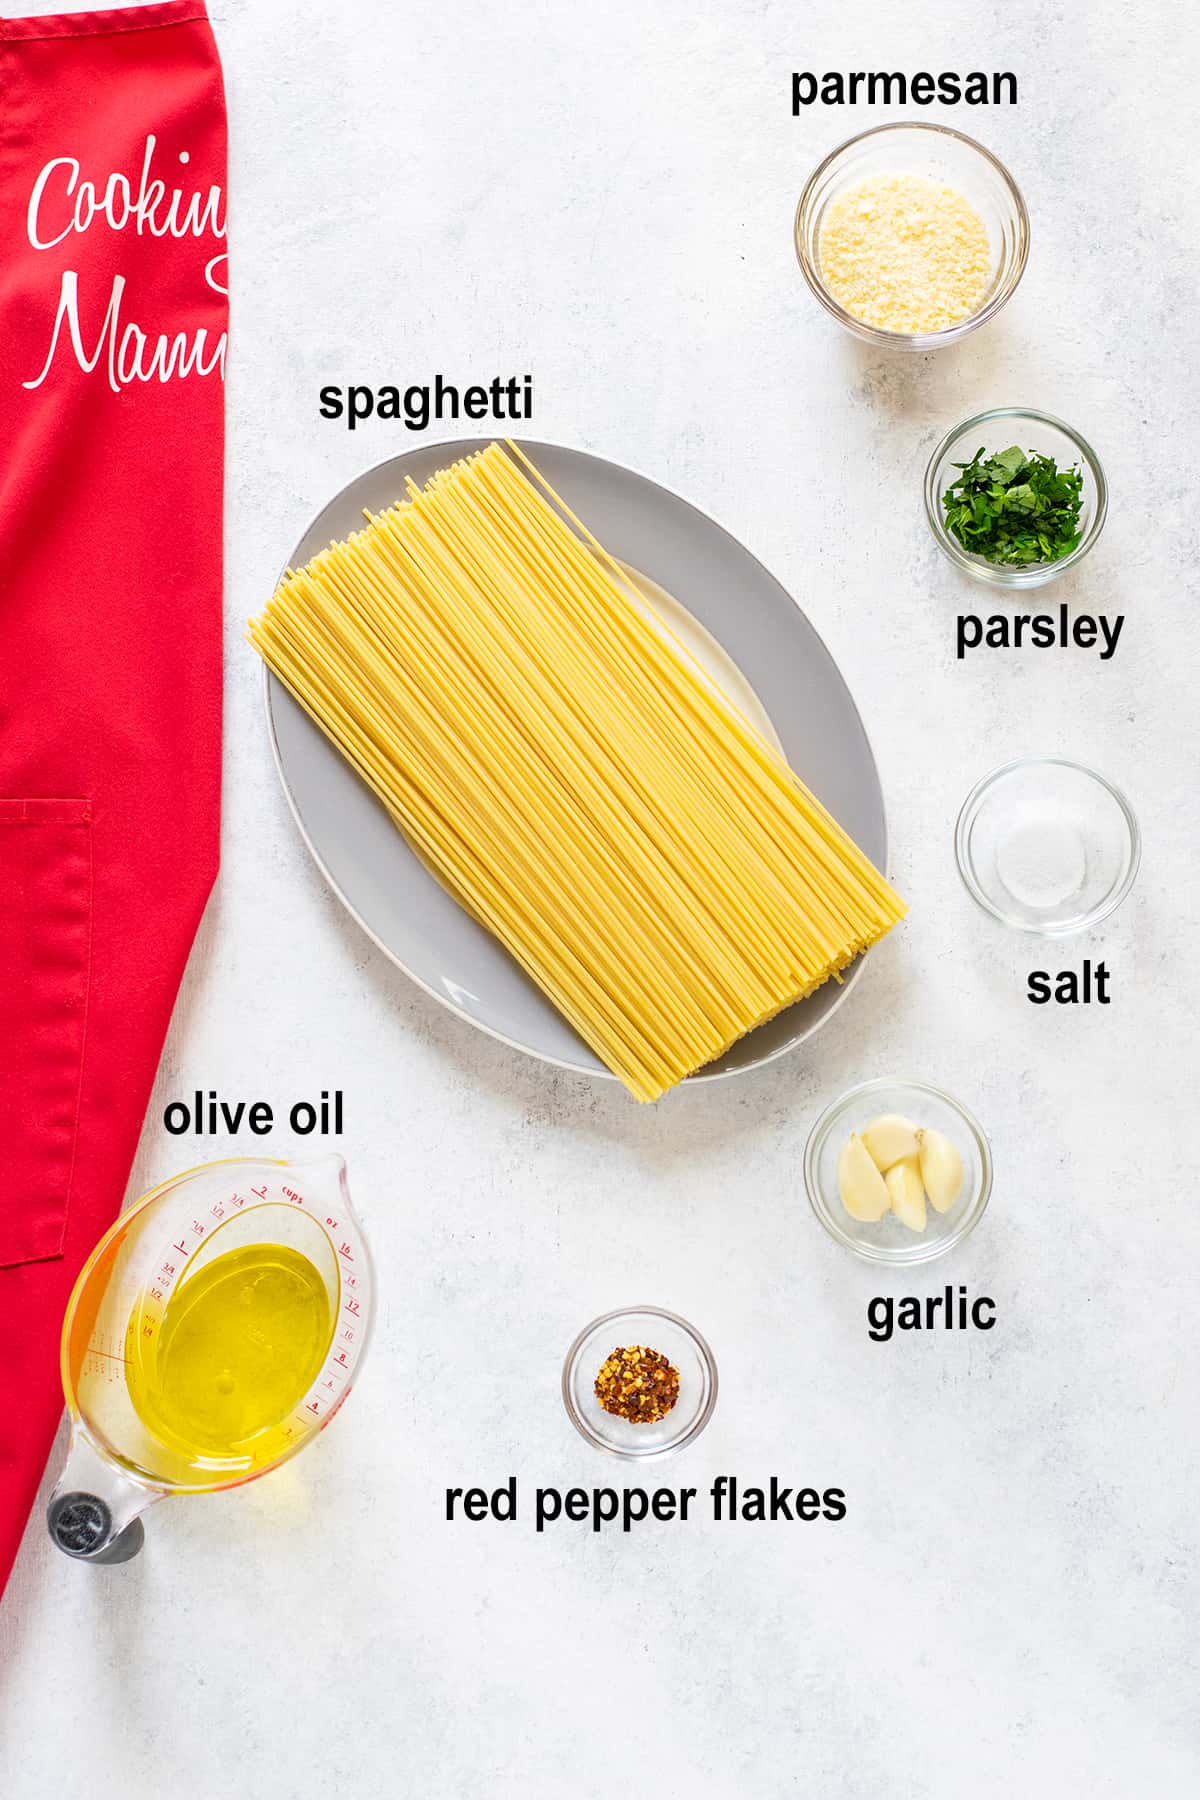 parmesan, spaghetti, parsley, salt, olive oil, garlic, red pepper flakes.